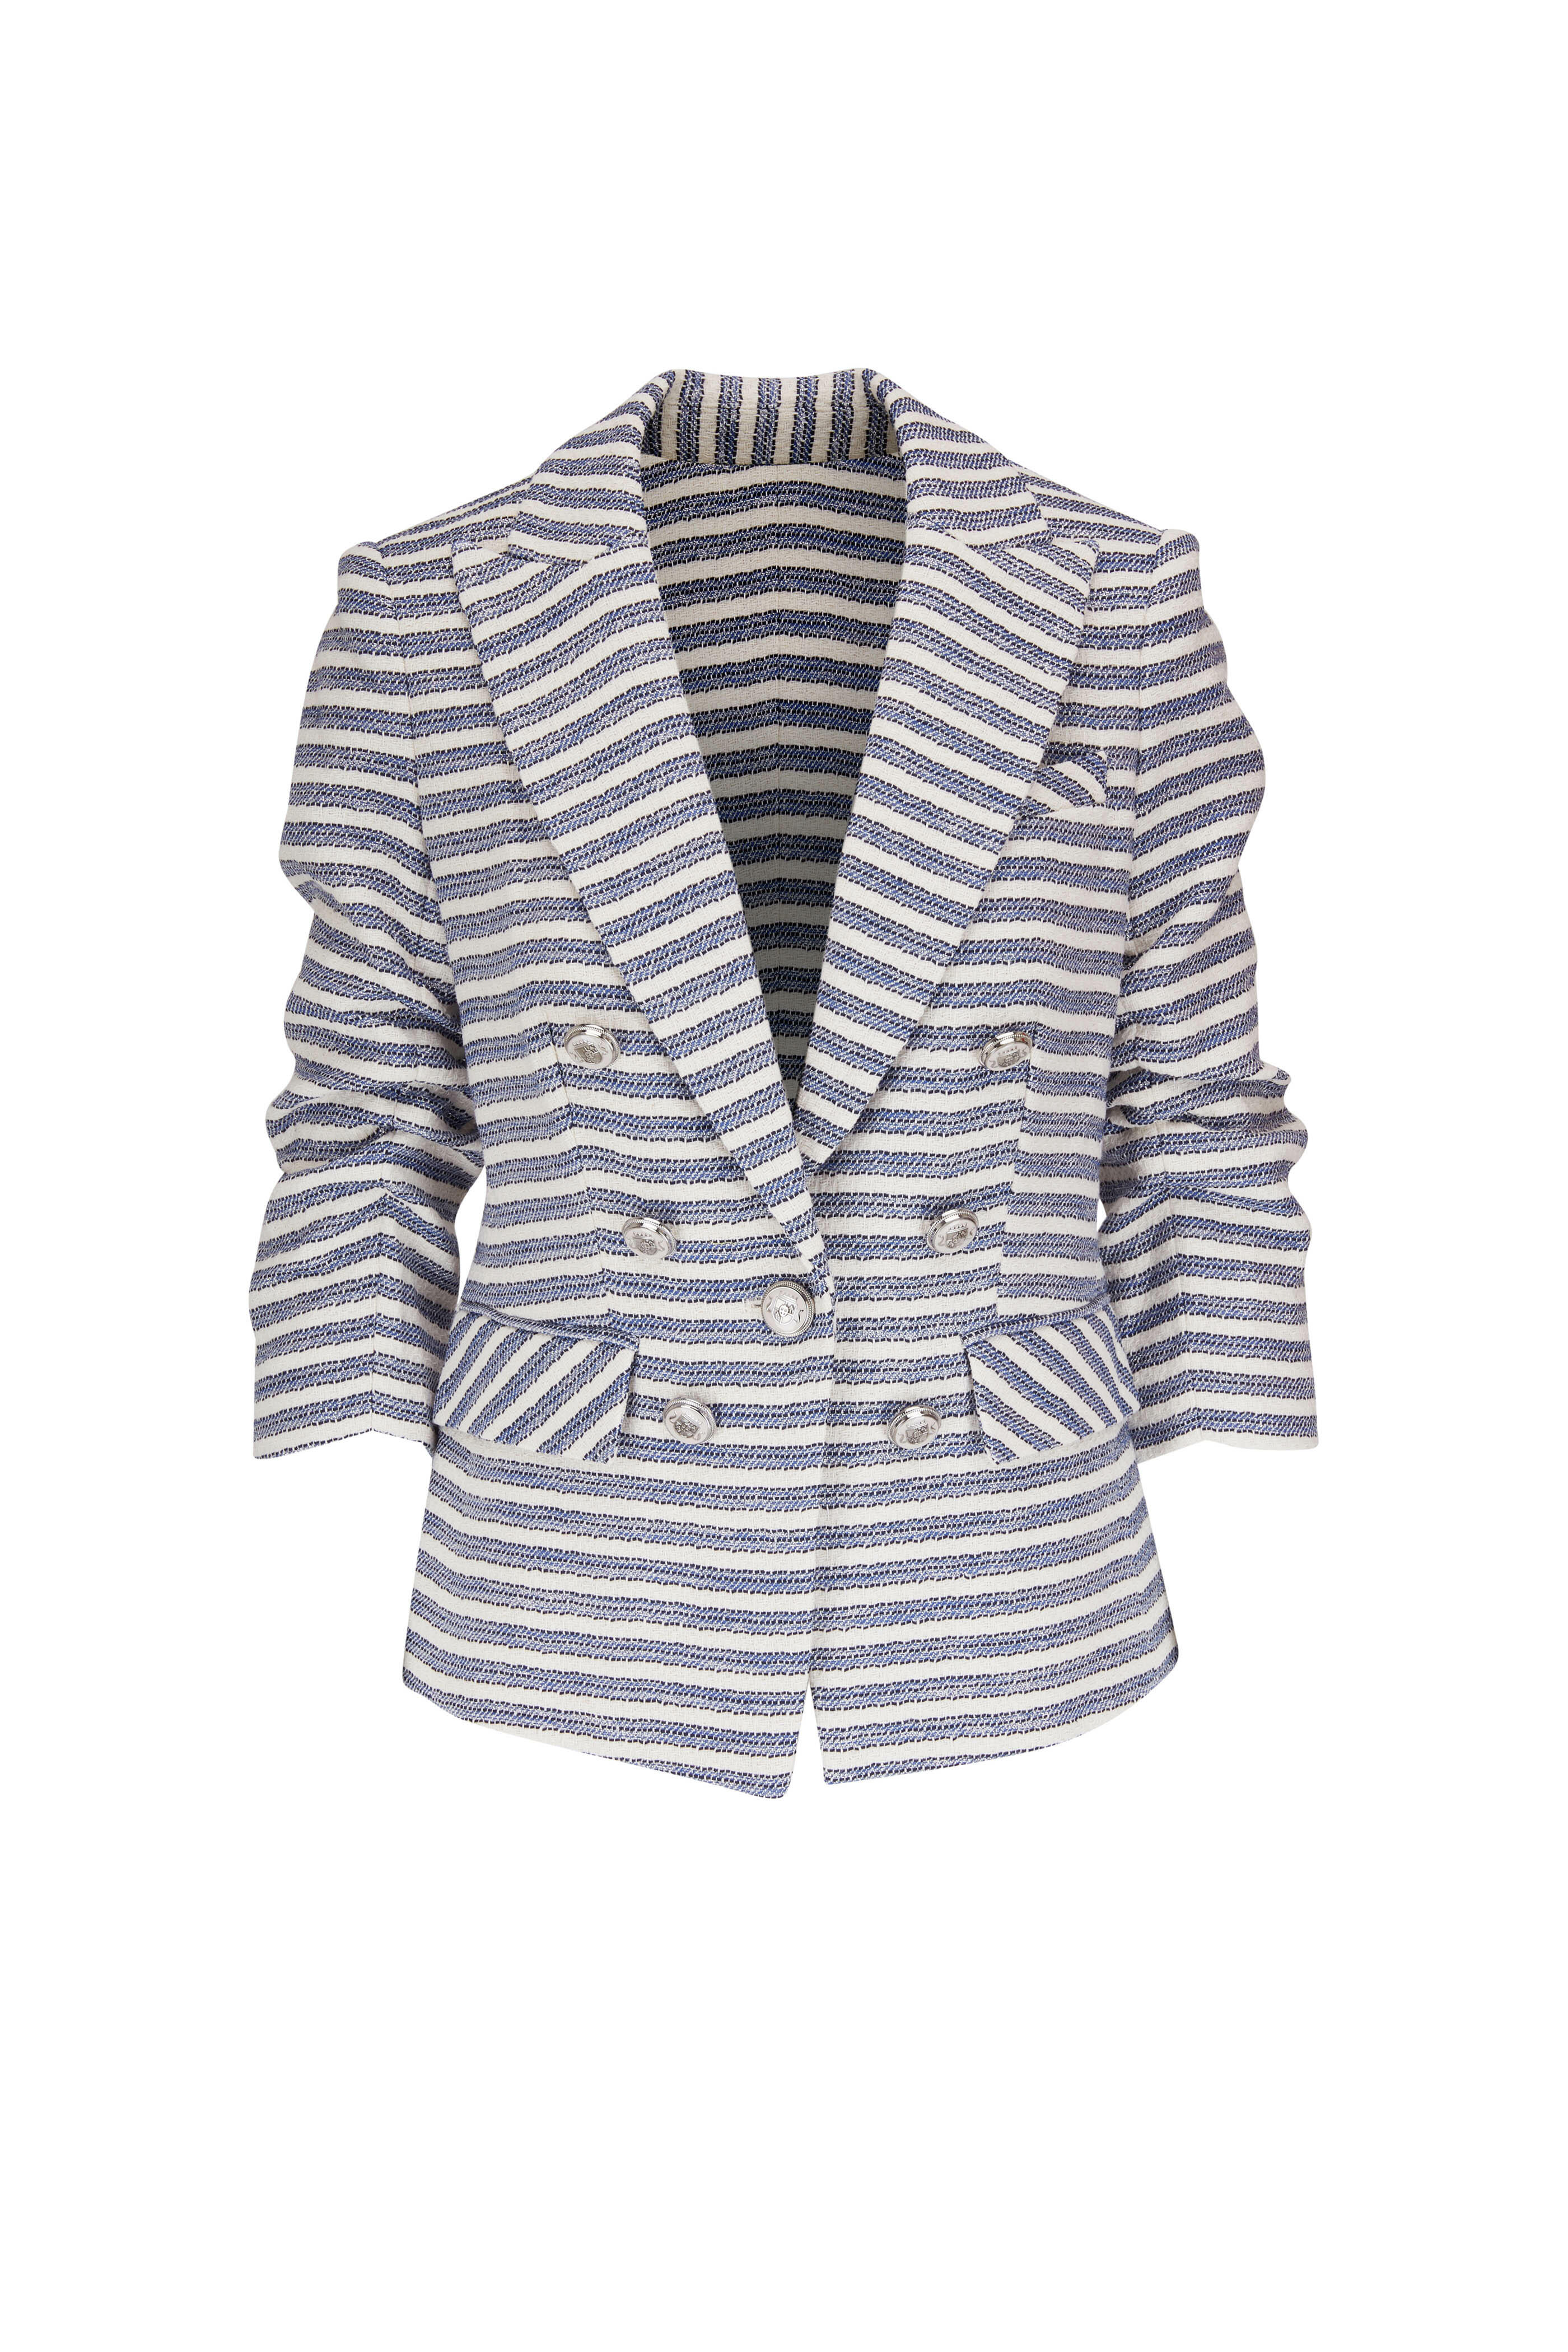 Veronica Beard - Ryland Blue Multi Striped Tweed Dickey Jacket